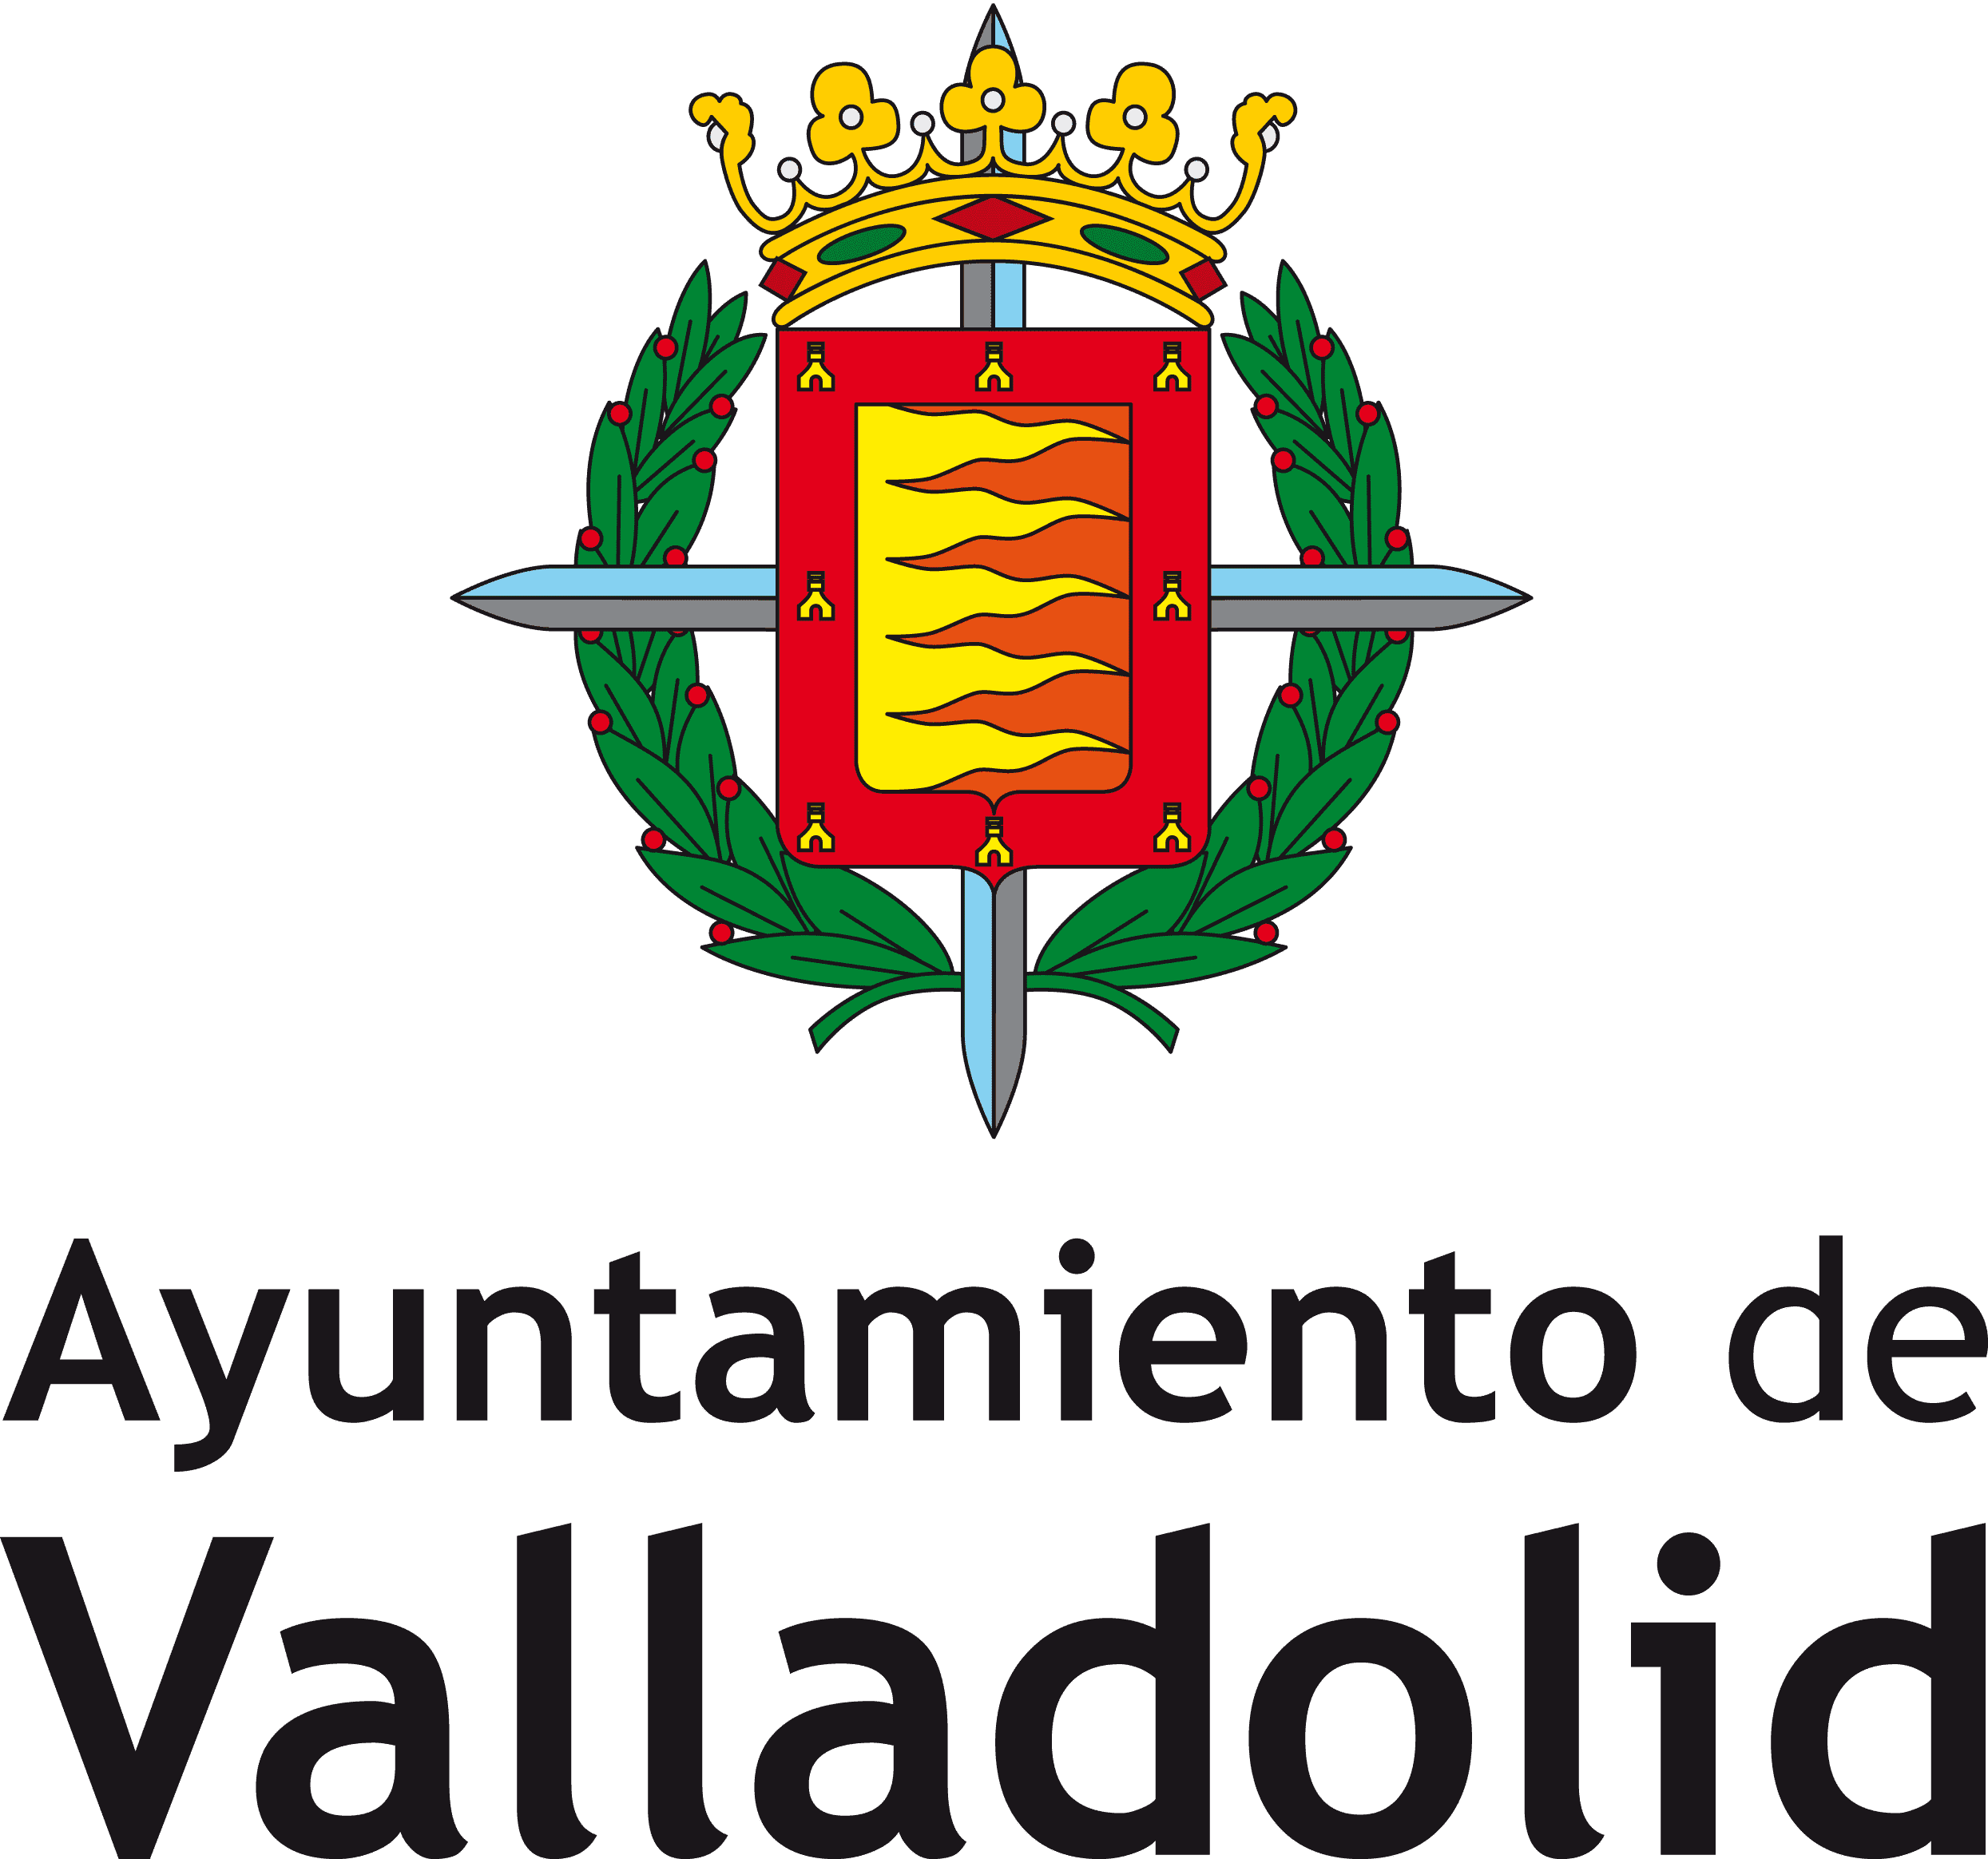 Psicóloga Valladolid, Psicología con Alma, Silvia Alonso.